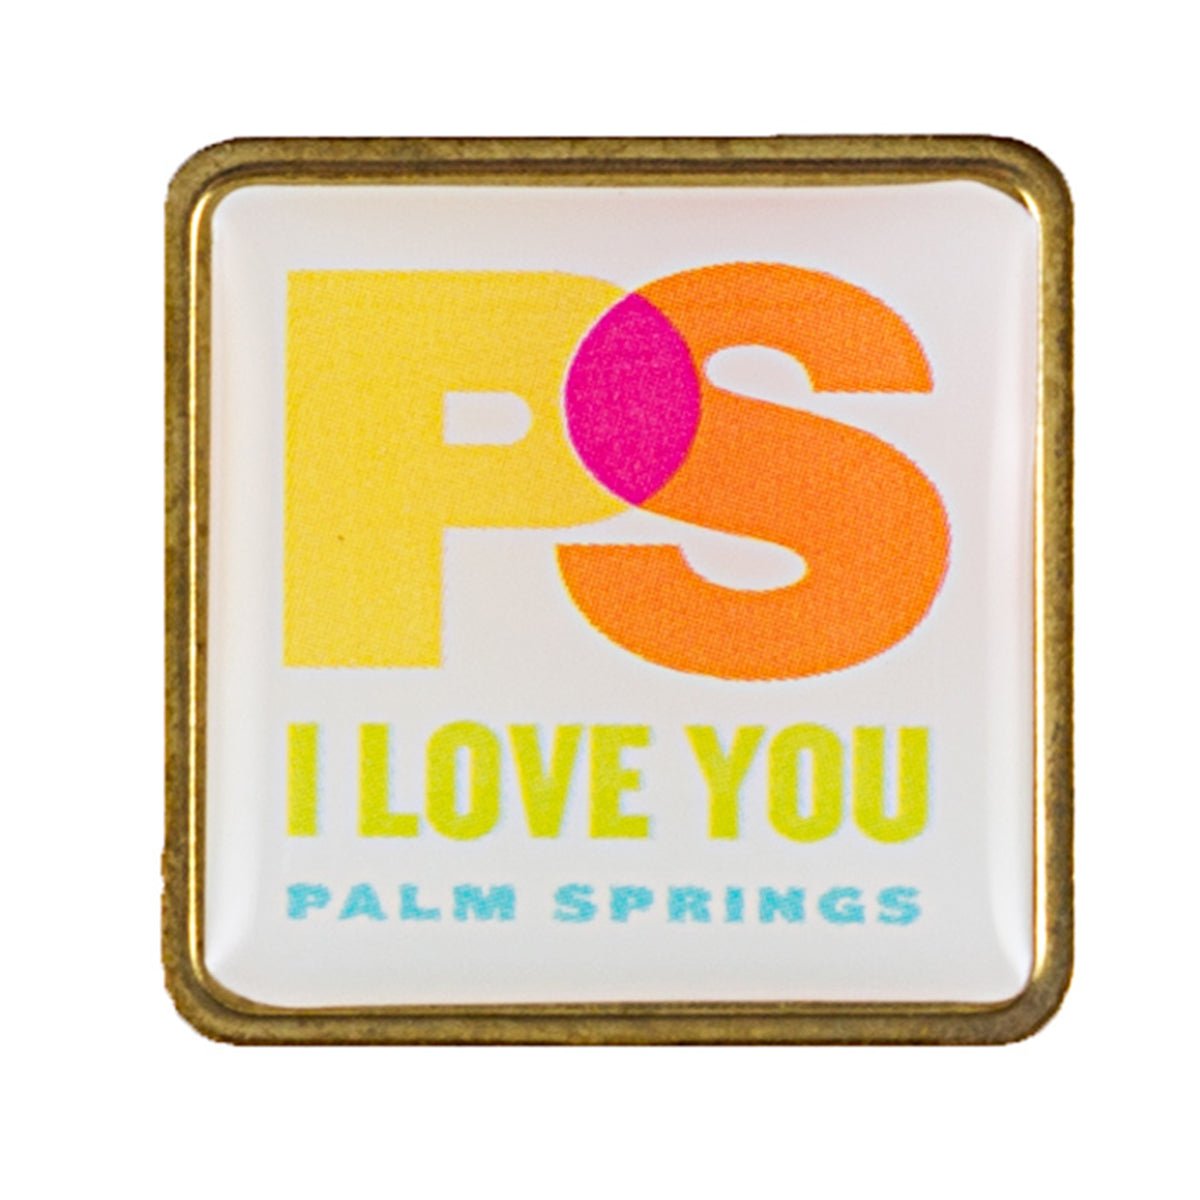 PS I Love You Palm Springs Lapel Pin - Destination PSP